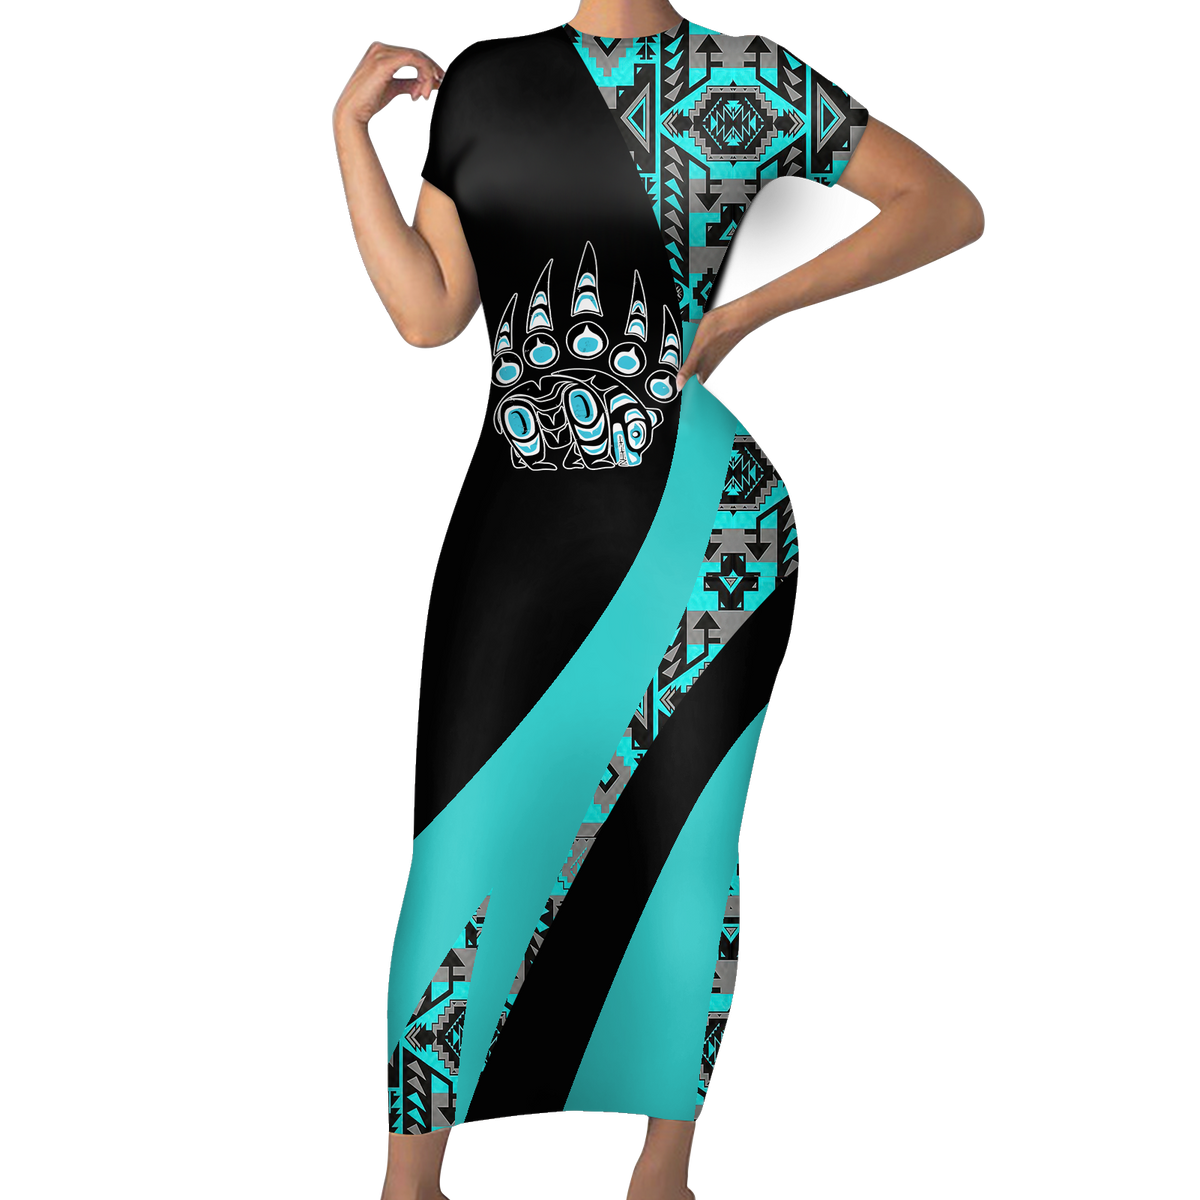 Powwow StoreSBD00189 Pattern Native ShortSleeved Body Dress